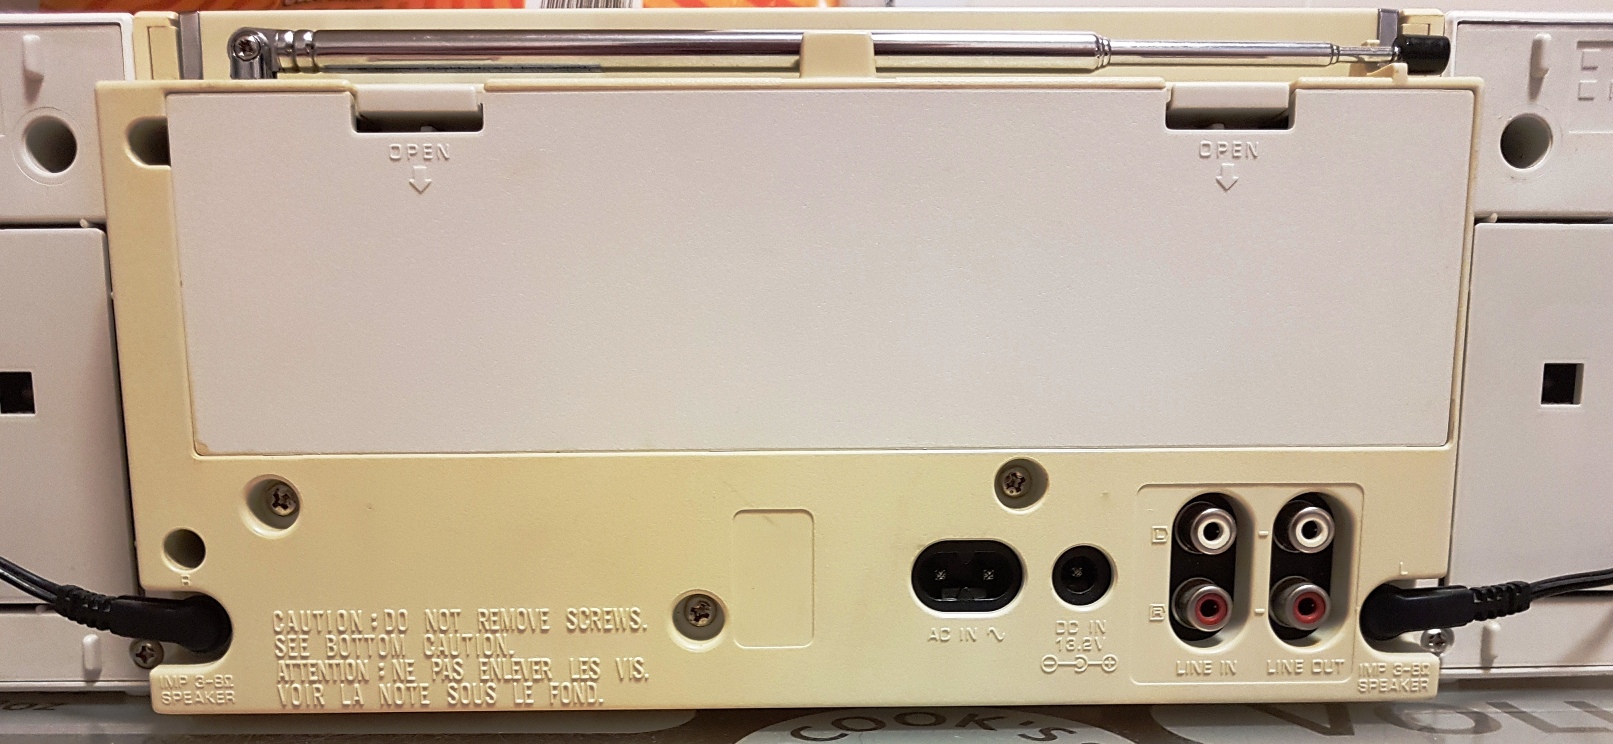 Panasonic RX-C50 Radio Cassette Recorder - March 2018 (7).jpg